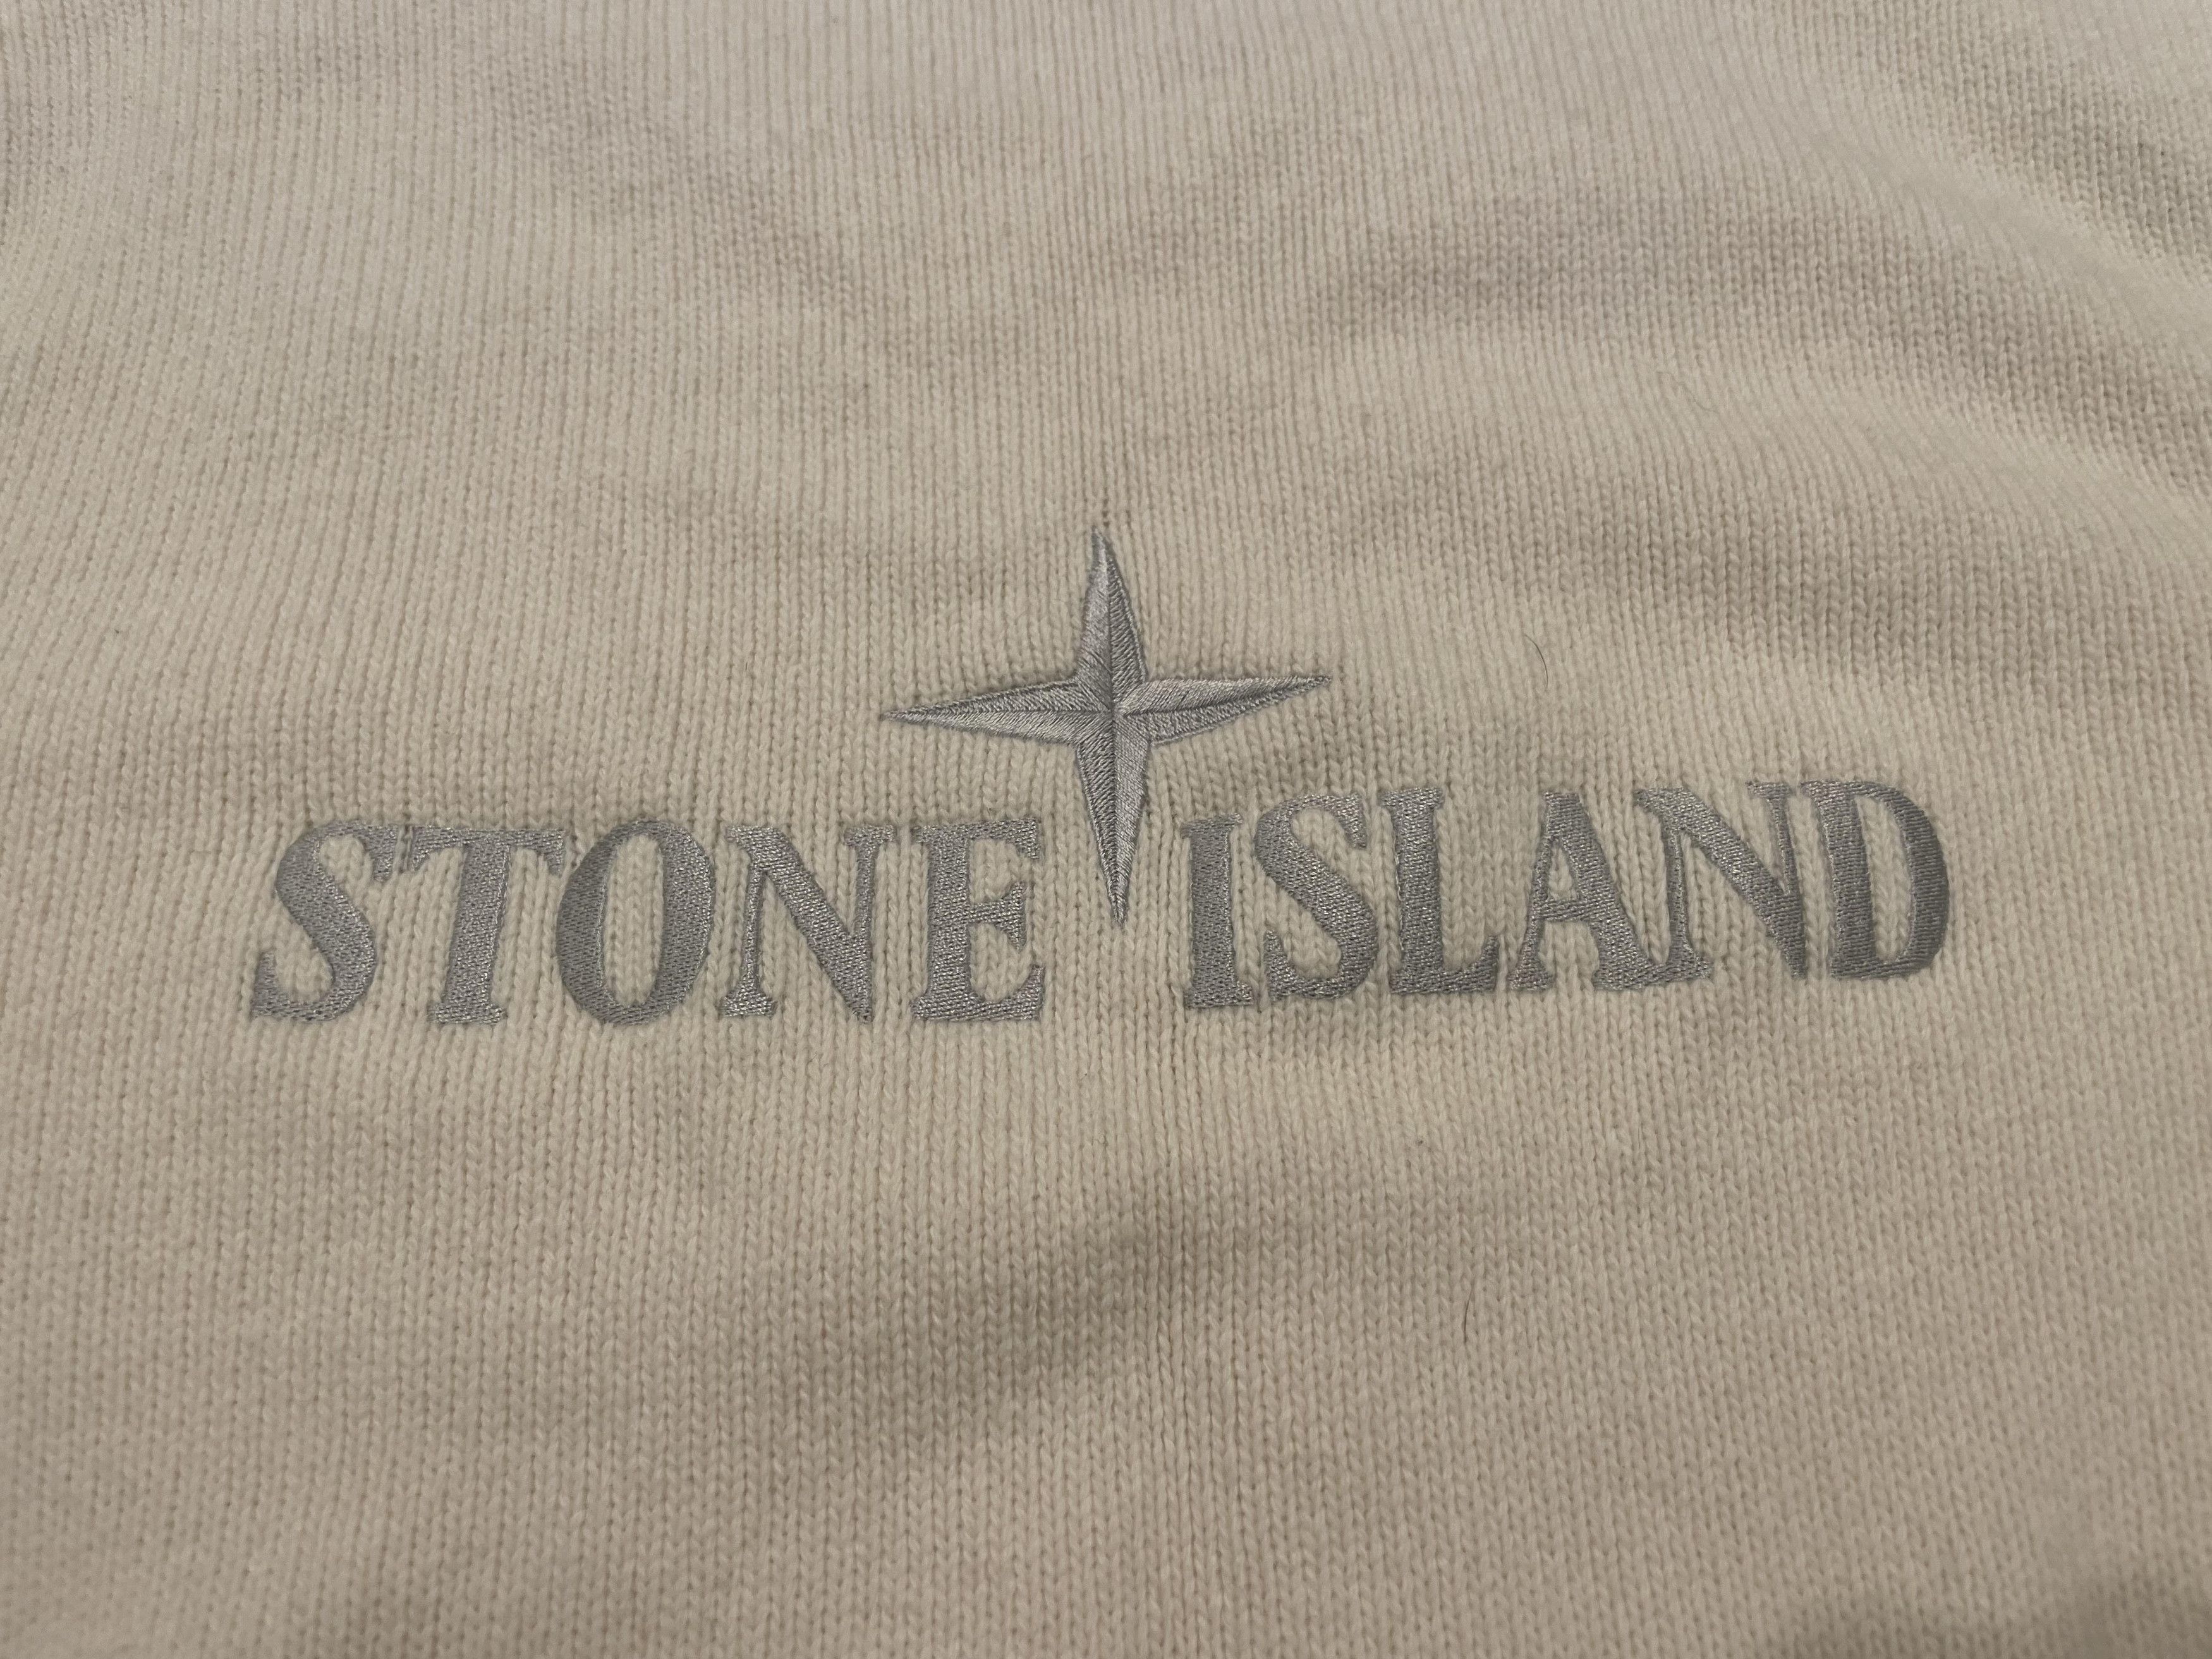 Stone Island Vintage Stone Island Knit Sweater Size US L / EU 52-54 / 3 - 3 Thumbnail